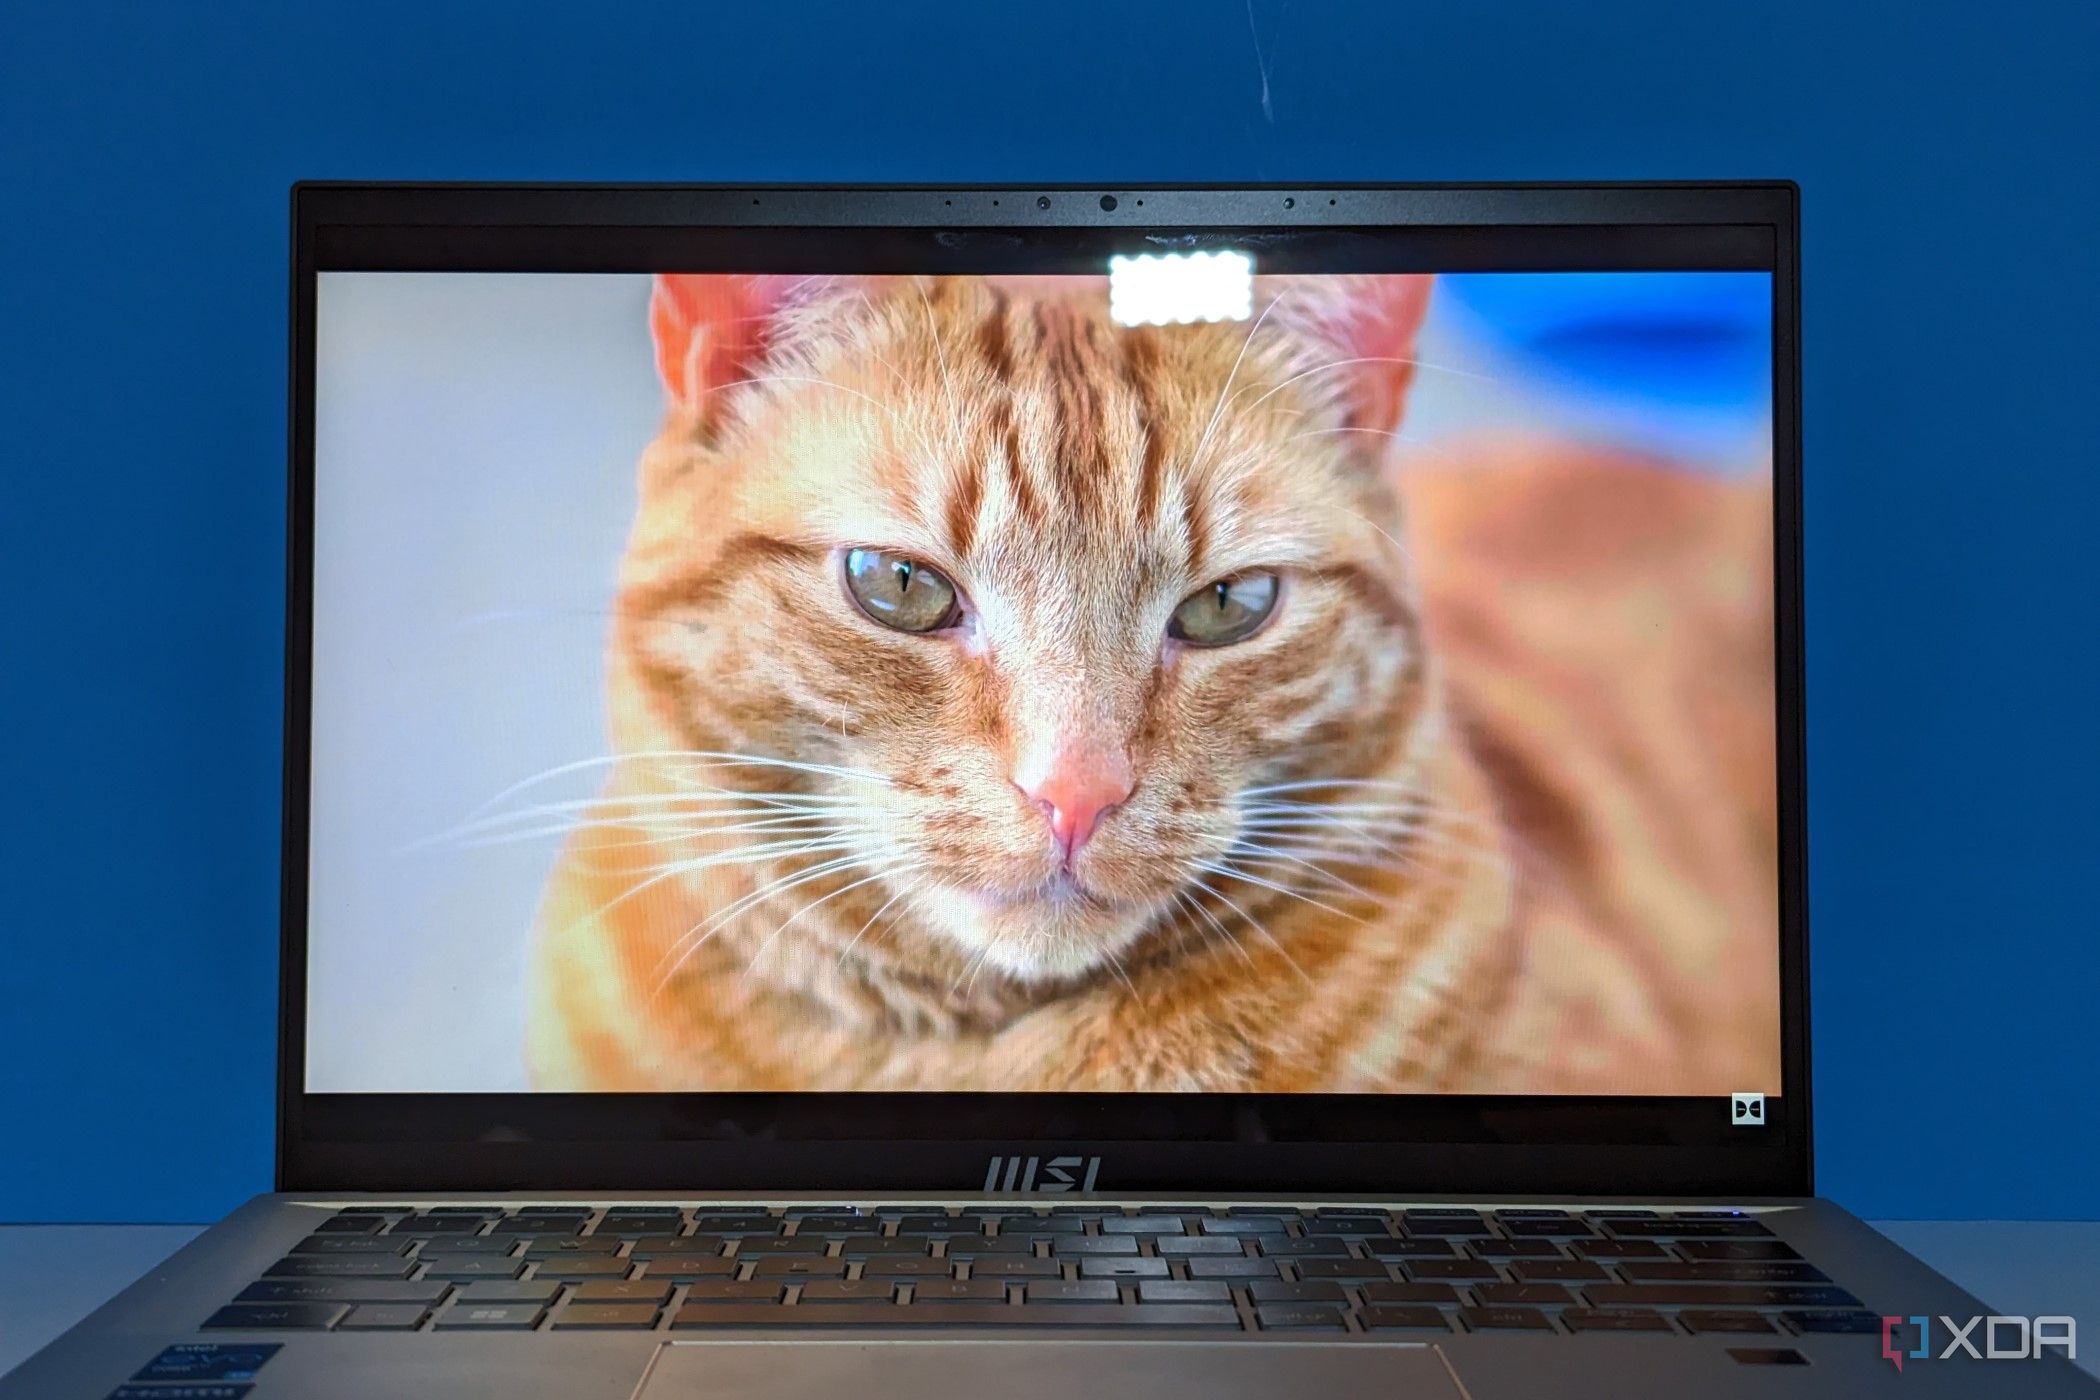 MSI Prestige 14 Evo showing a cat on the screen